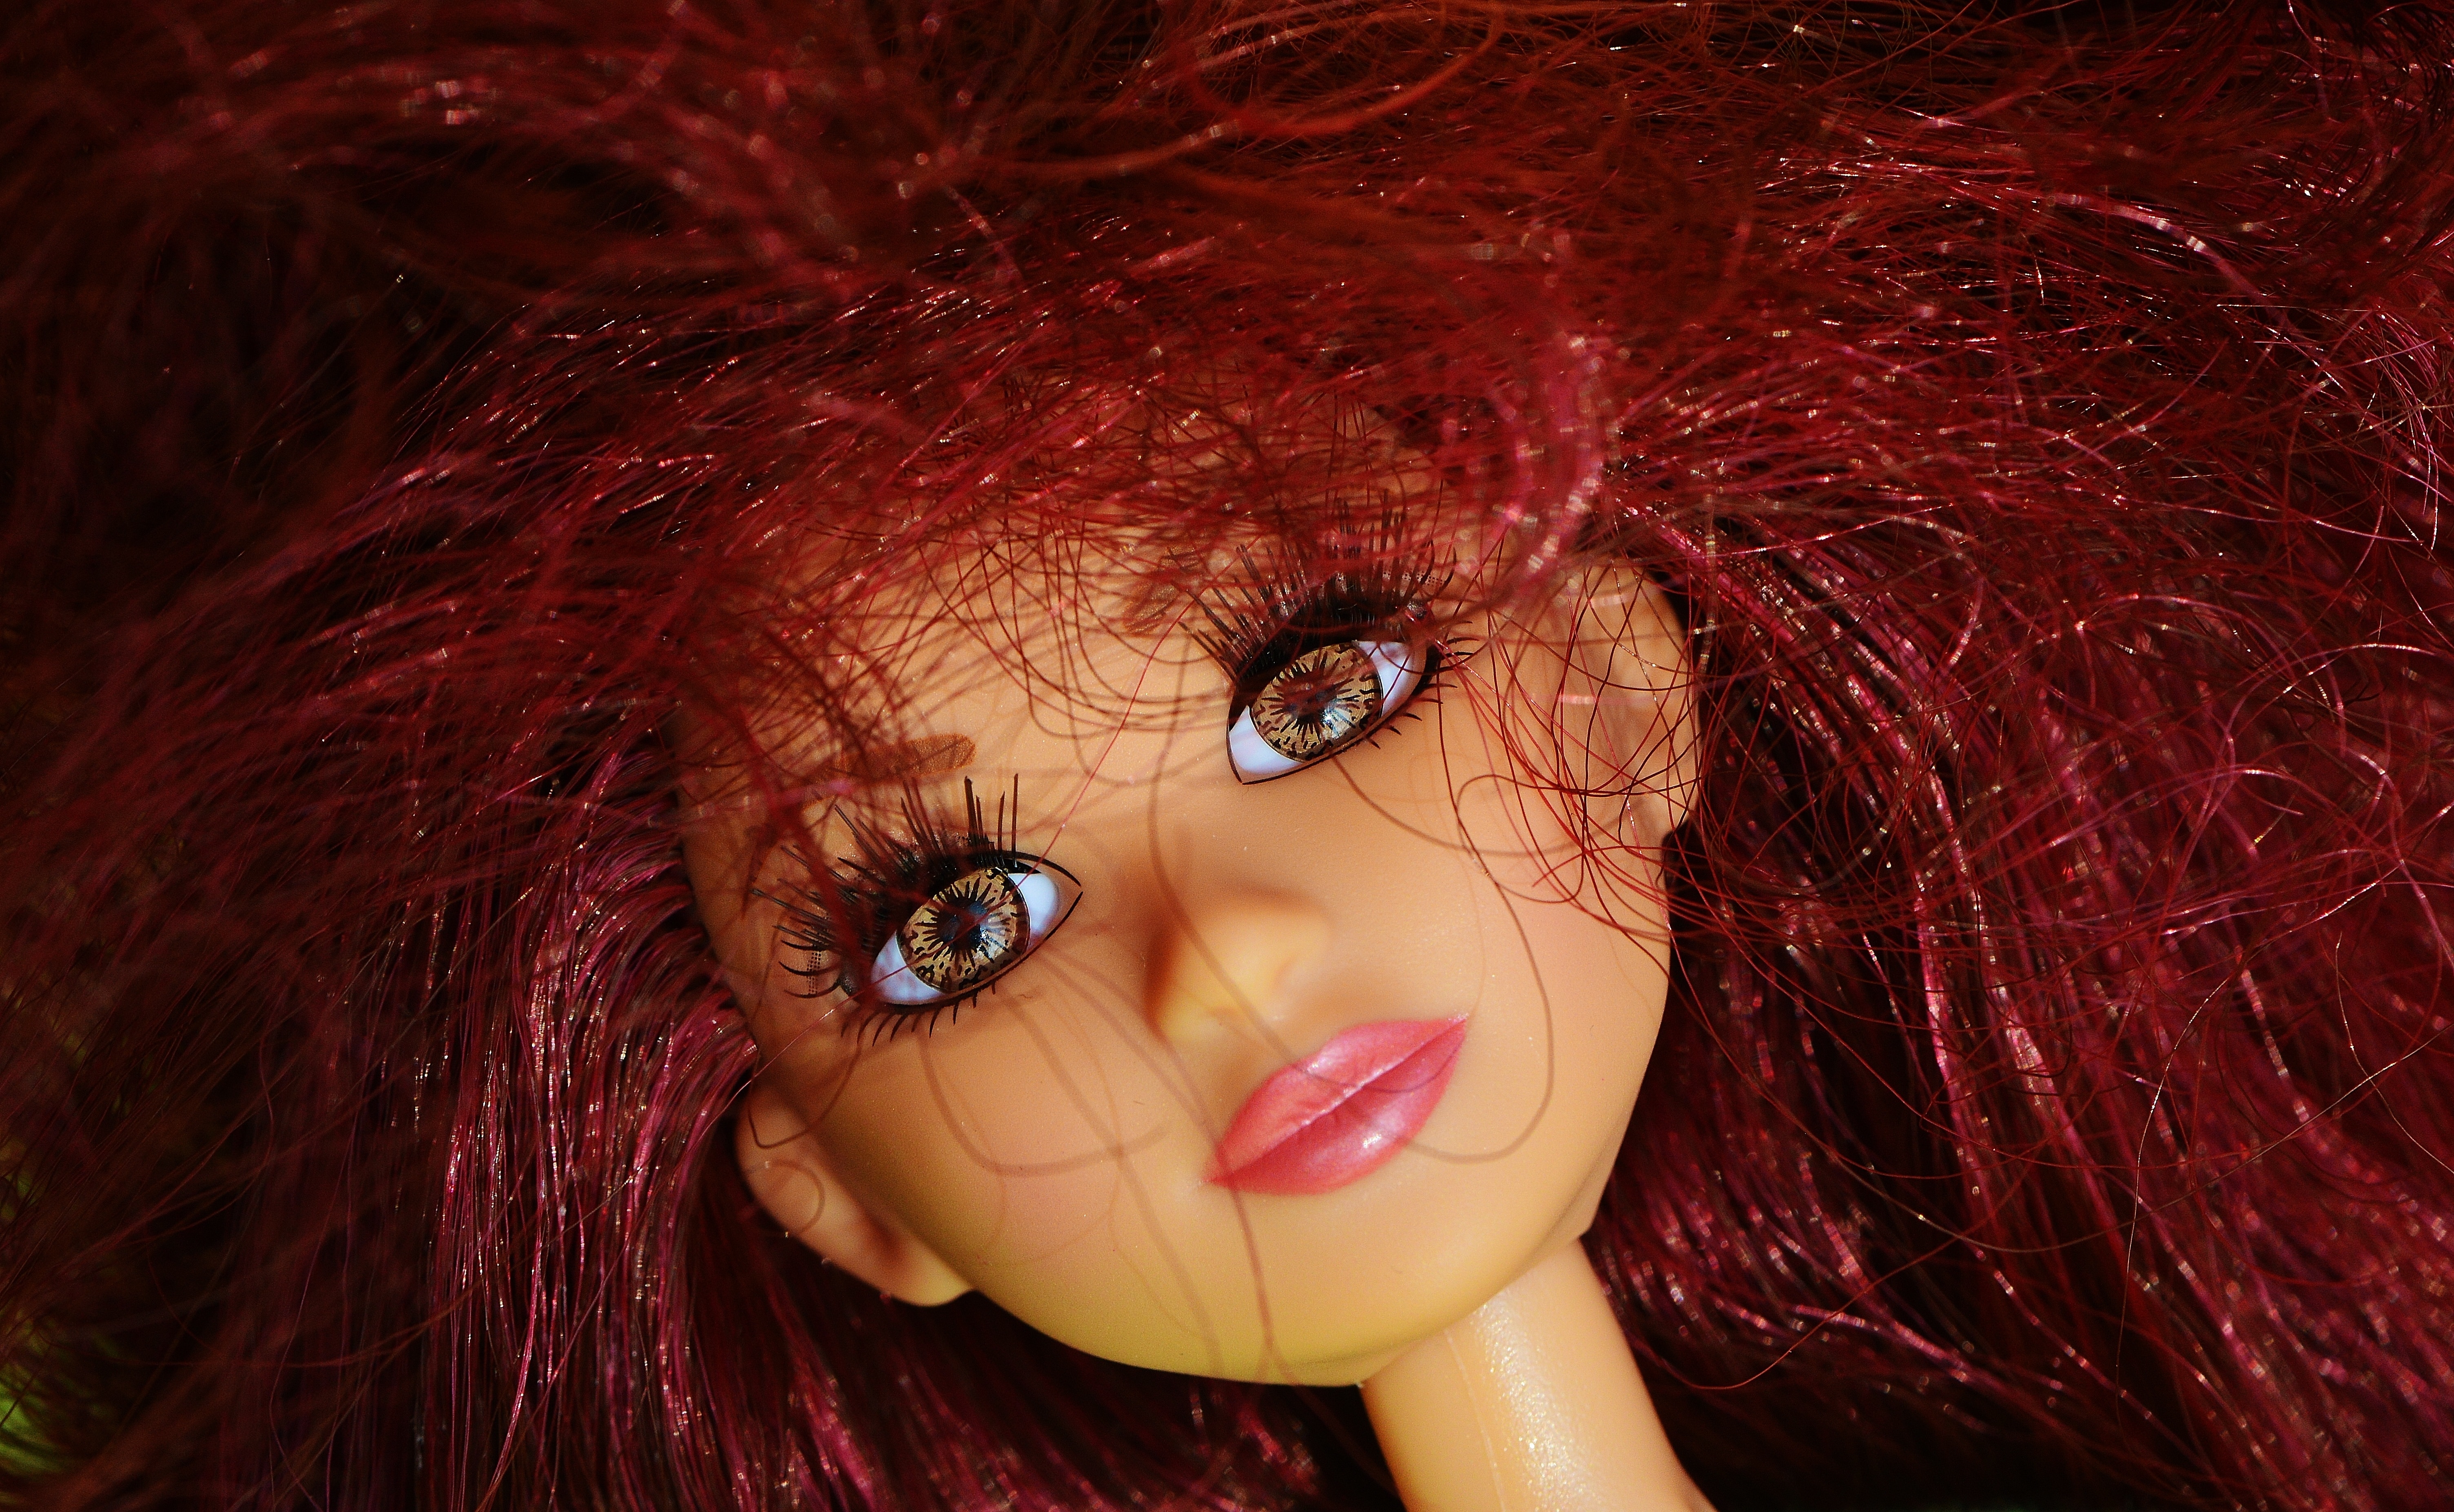 bratz doll with curly hair